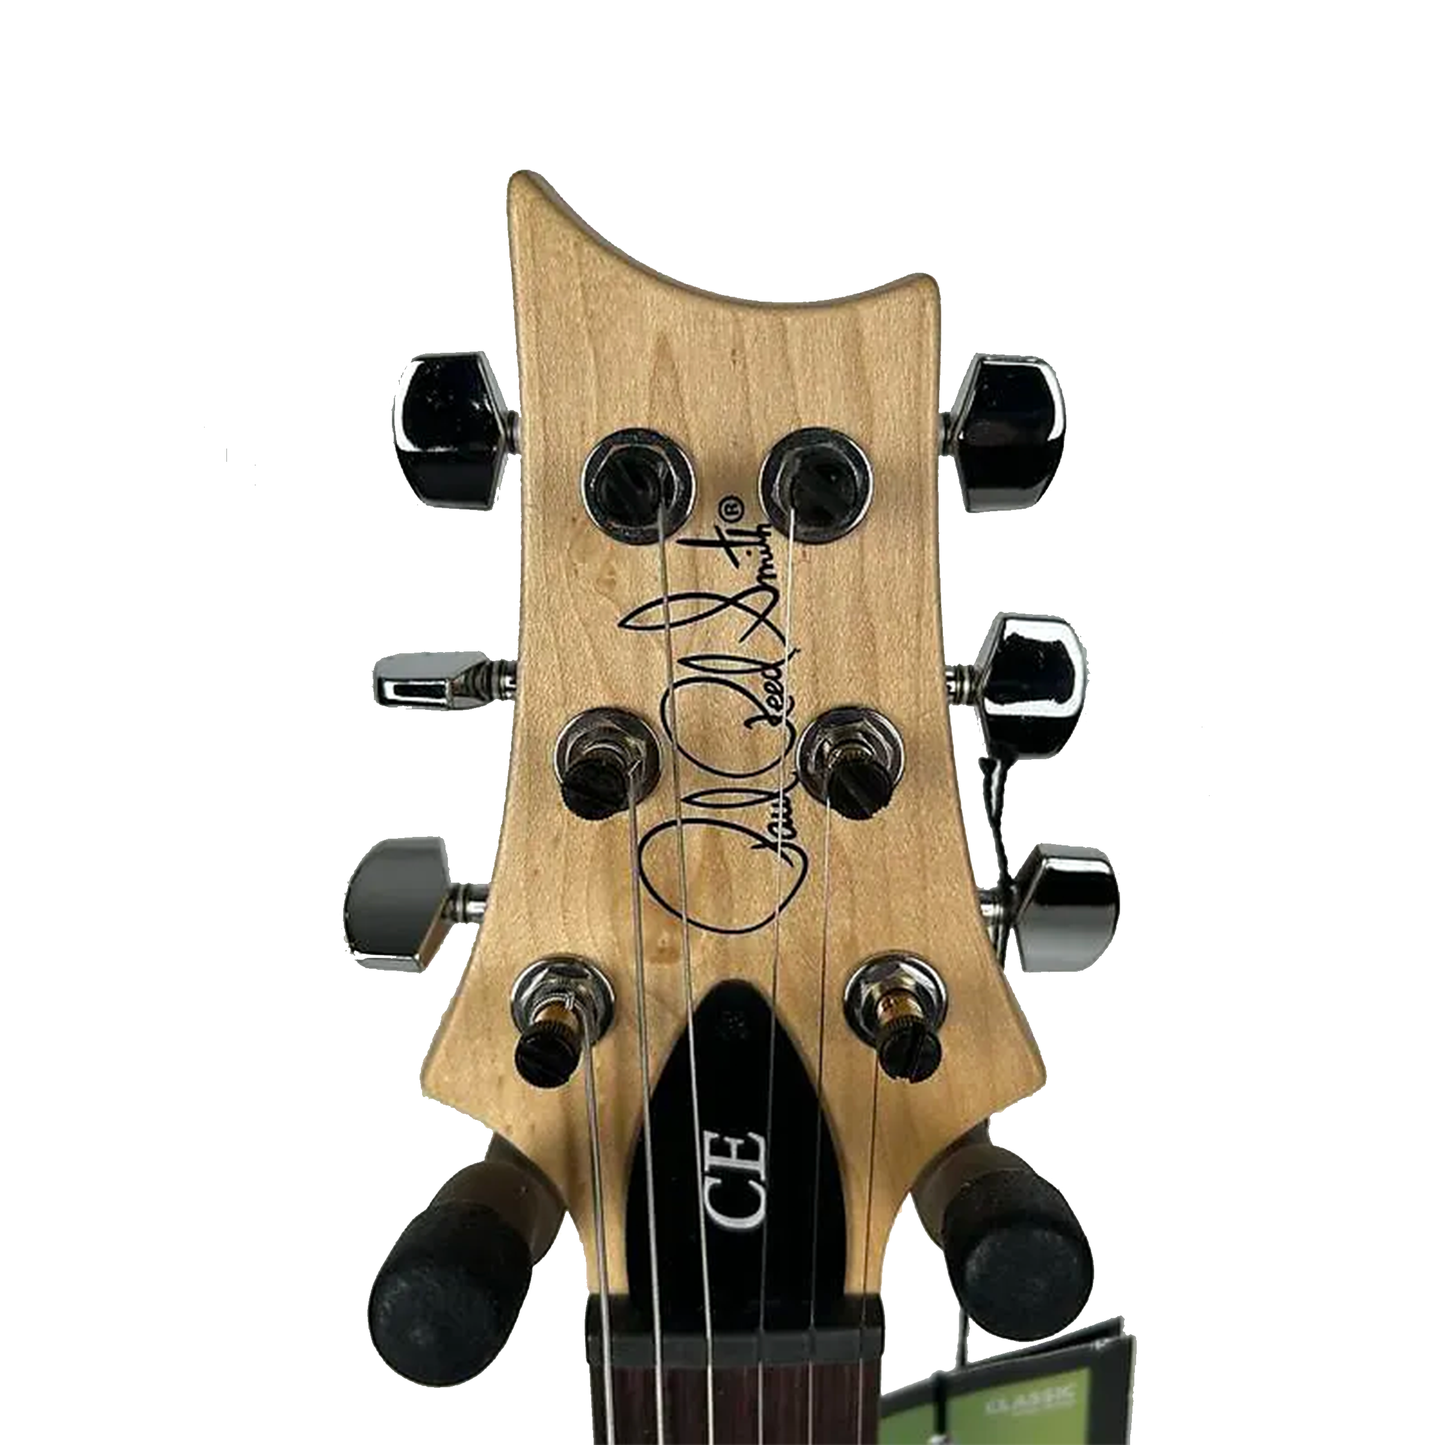 PRS CE 24 - Electric Guitar in Dark Cherry Sunburst